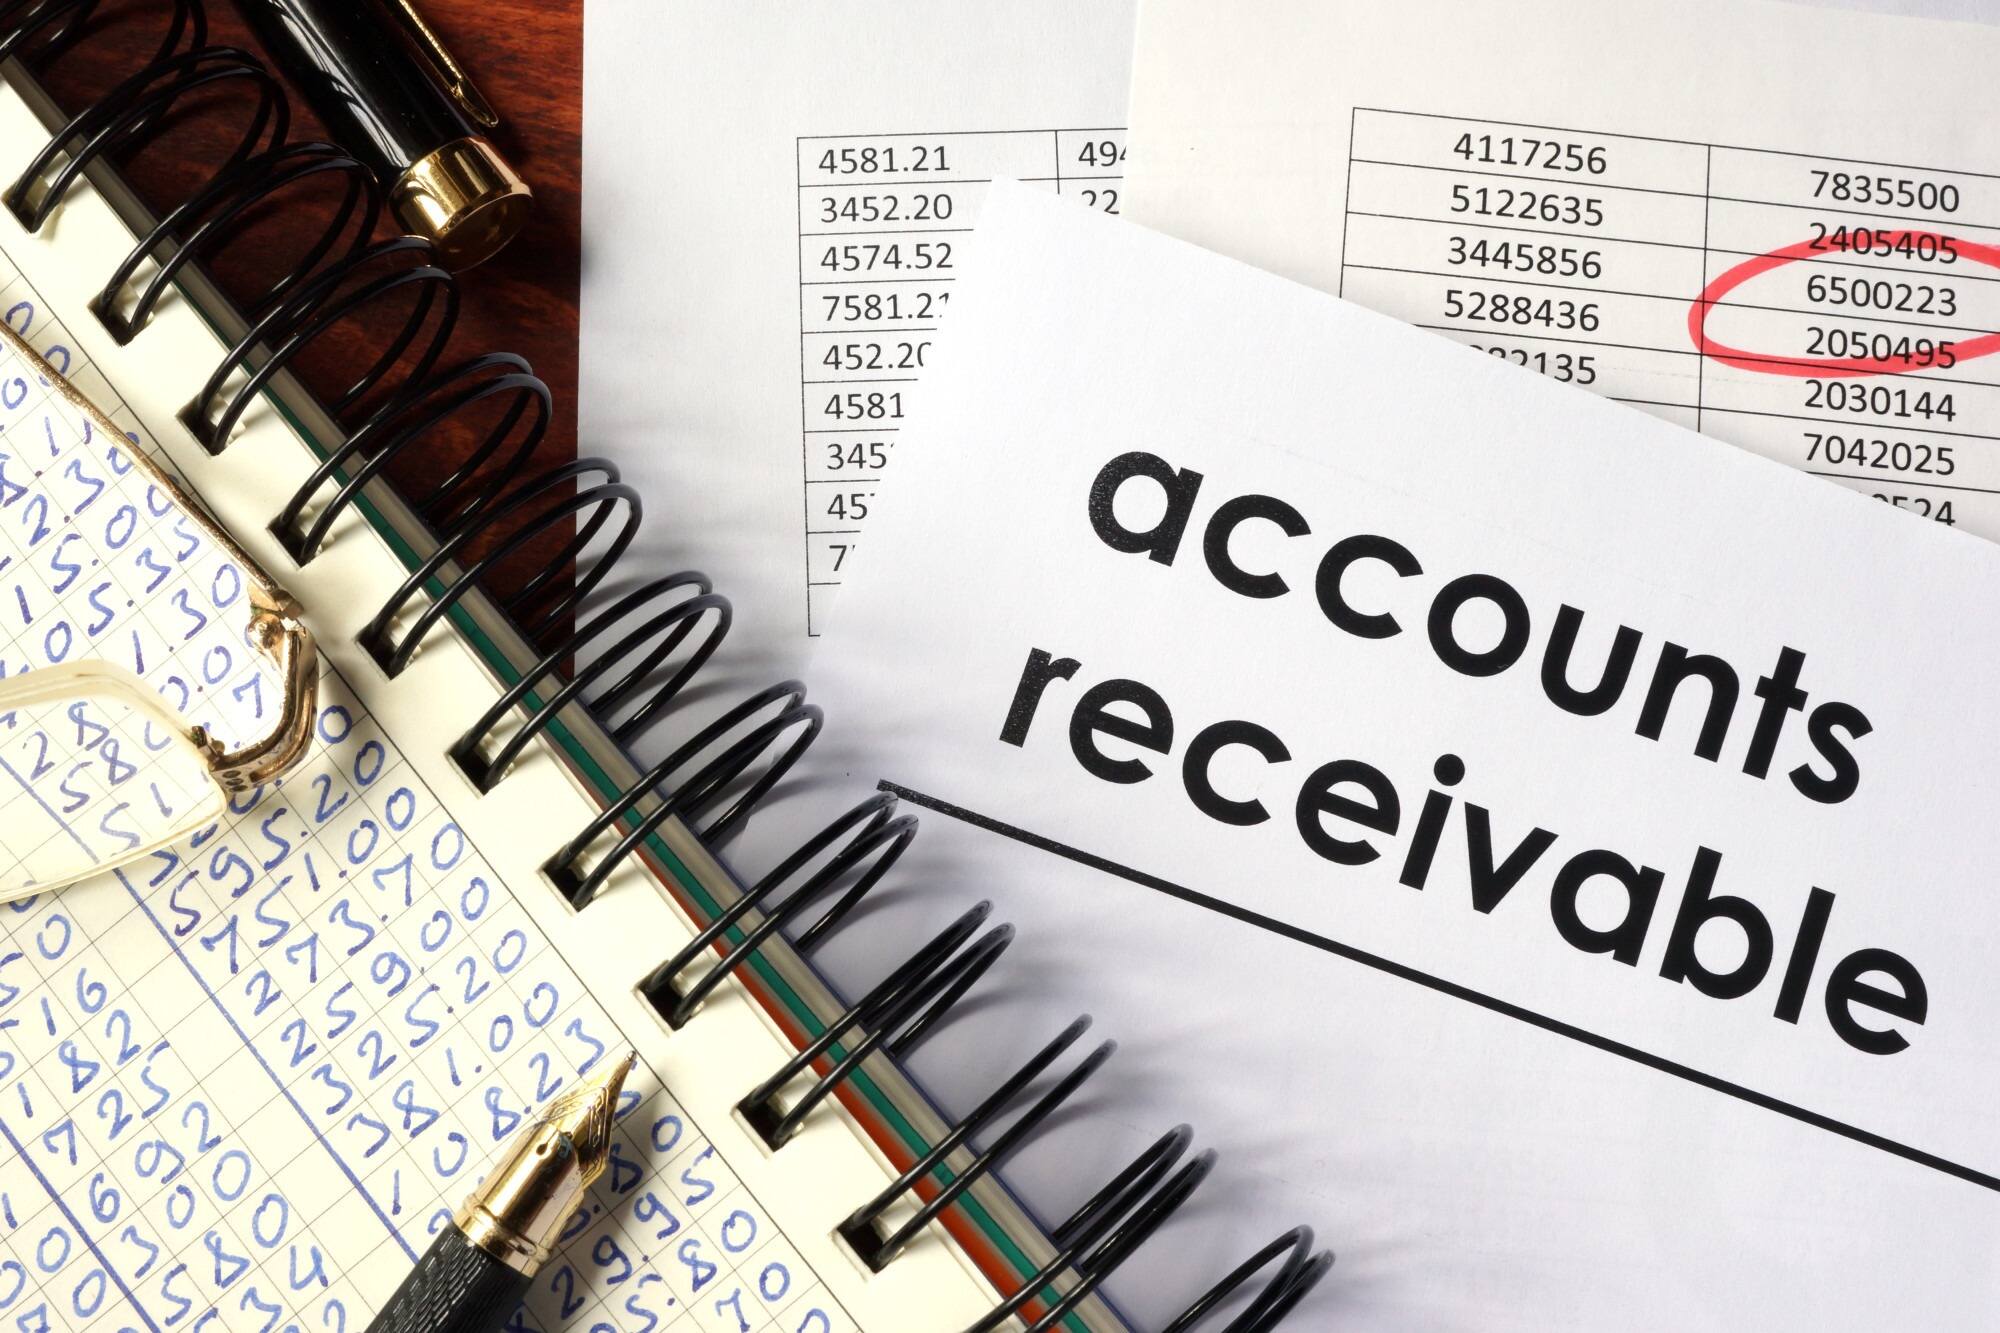 Accounts receivable on QuickBooks invoices